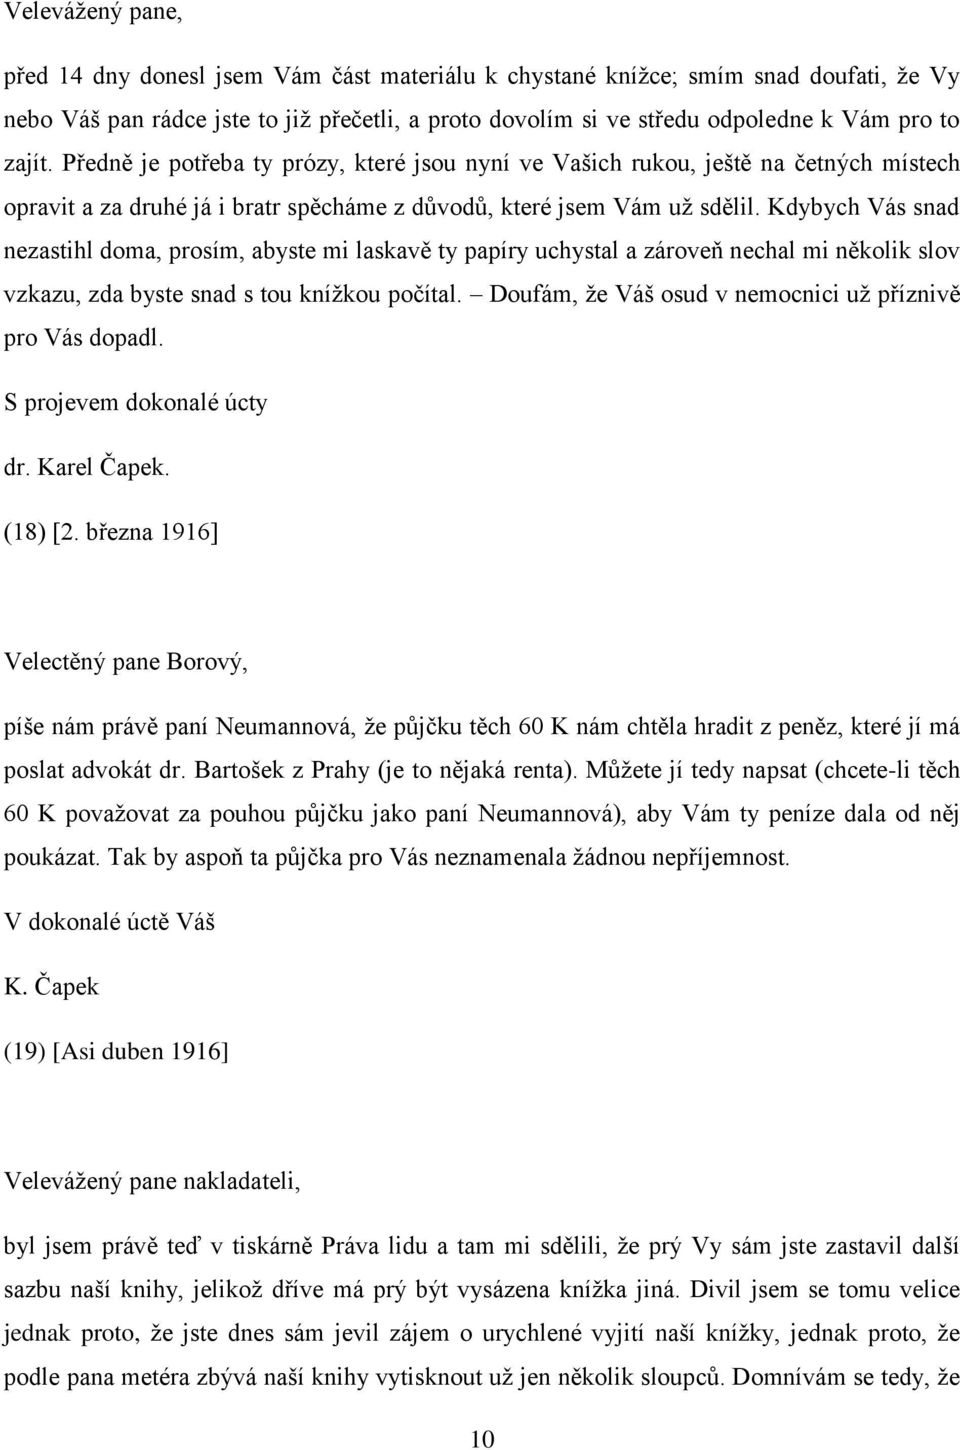 KAREL ČAPEK KORESPONDENCE I 1 EDVARDU BABÁKOVI (1) Slovutný pane profesore,  - PDF Free Download